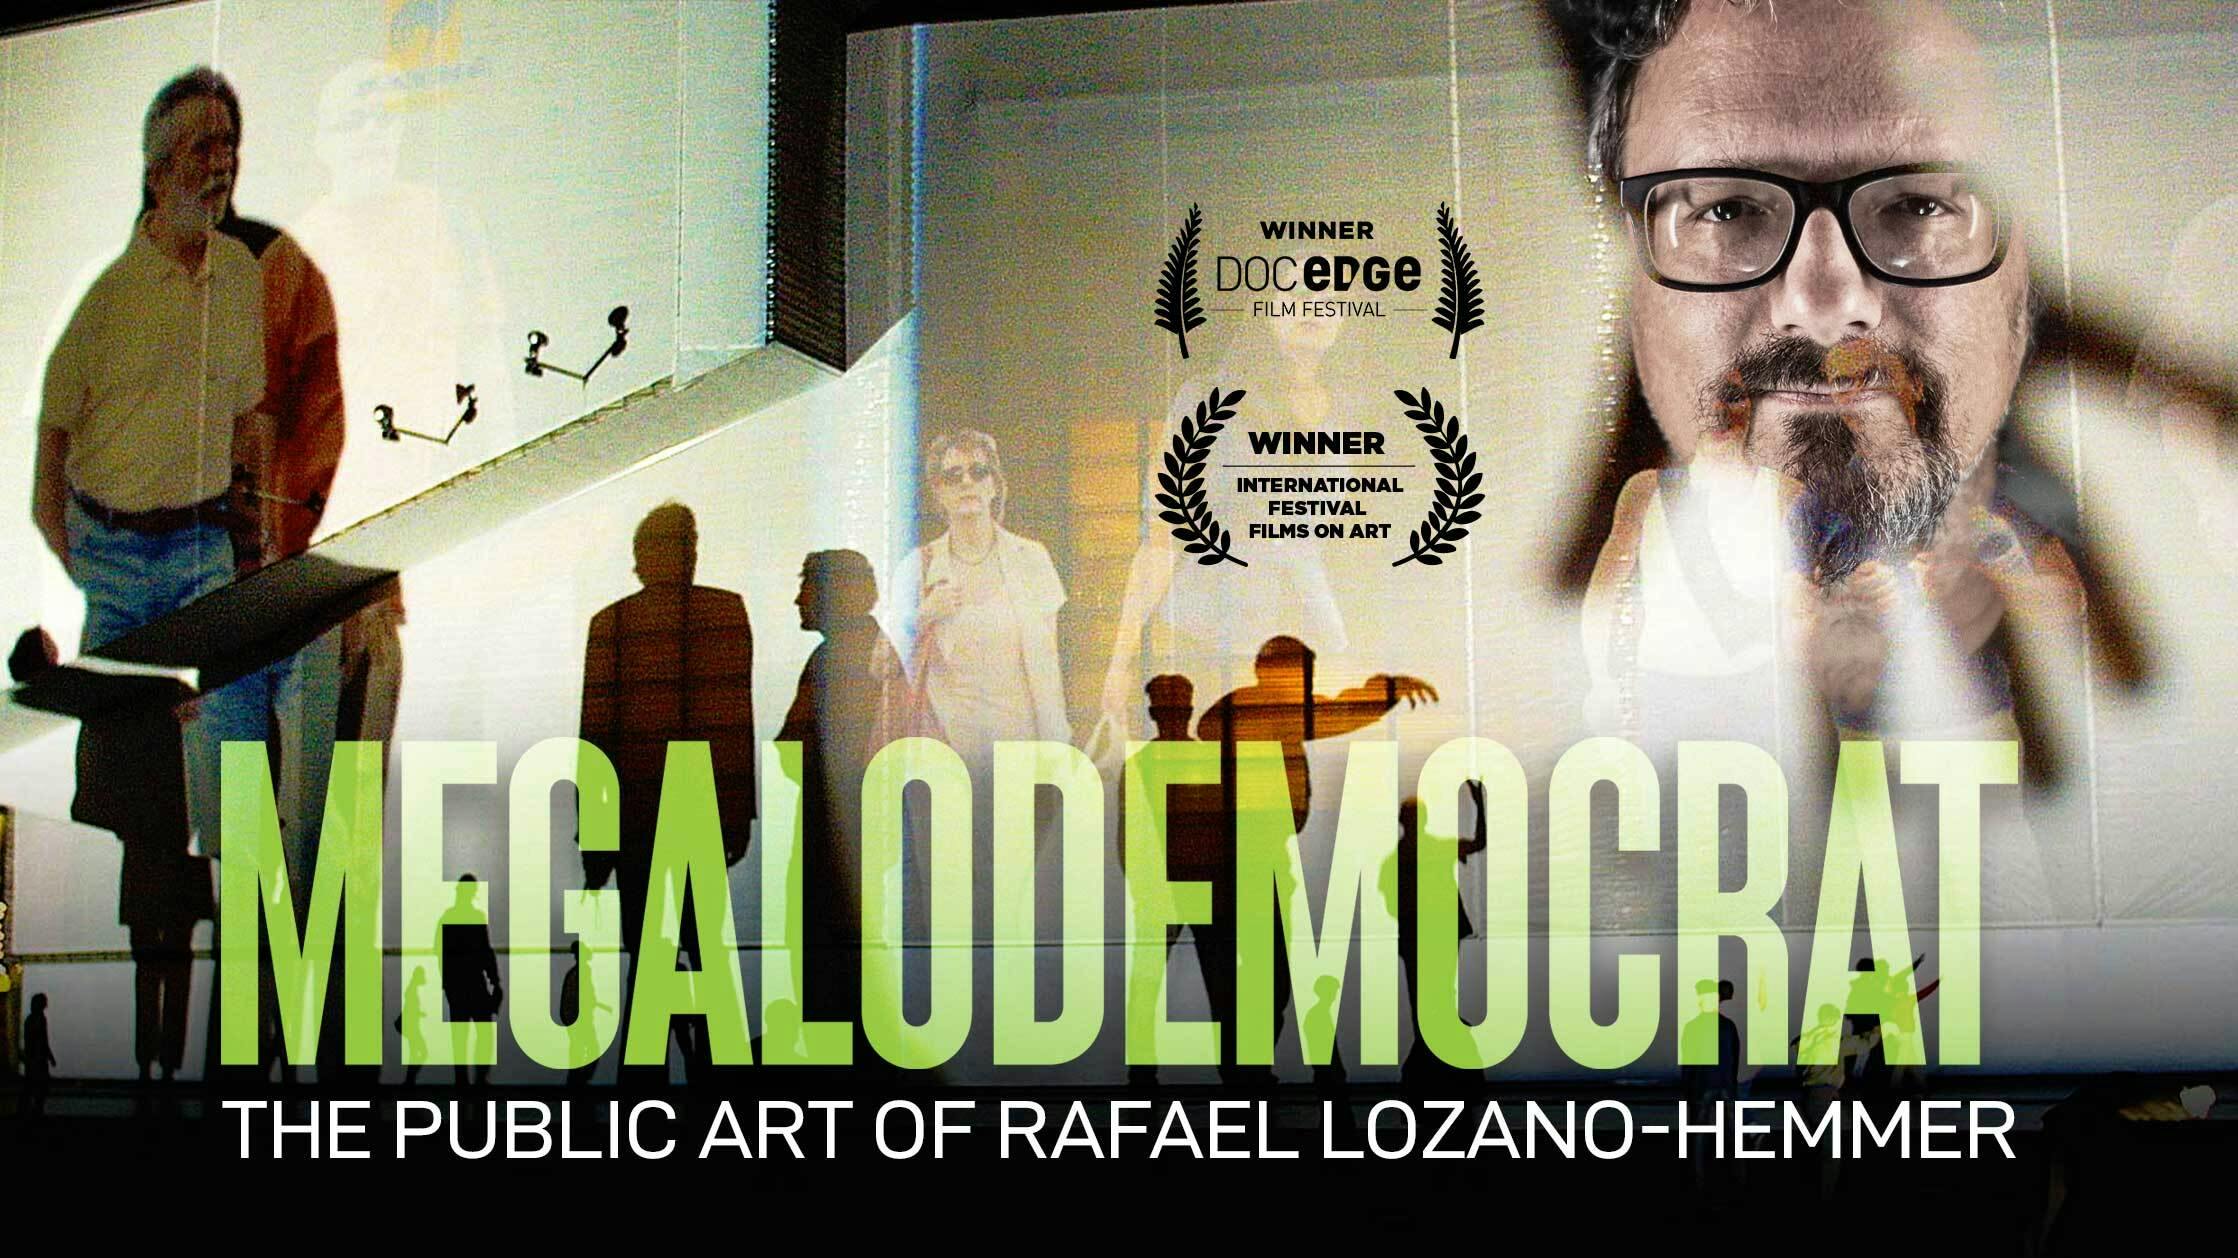 Megalodemocrat: The Public Art Of Rafael Lozano-Hemmer